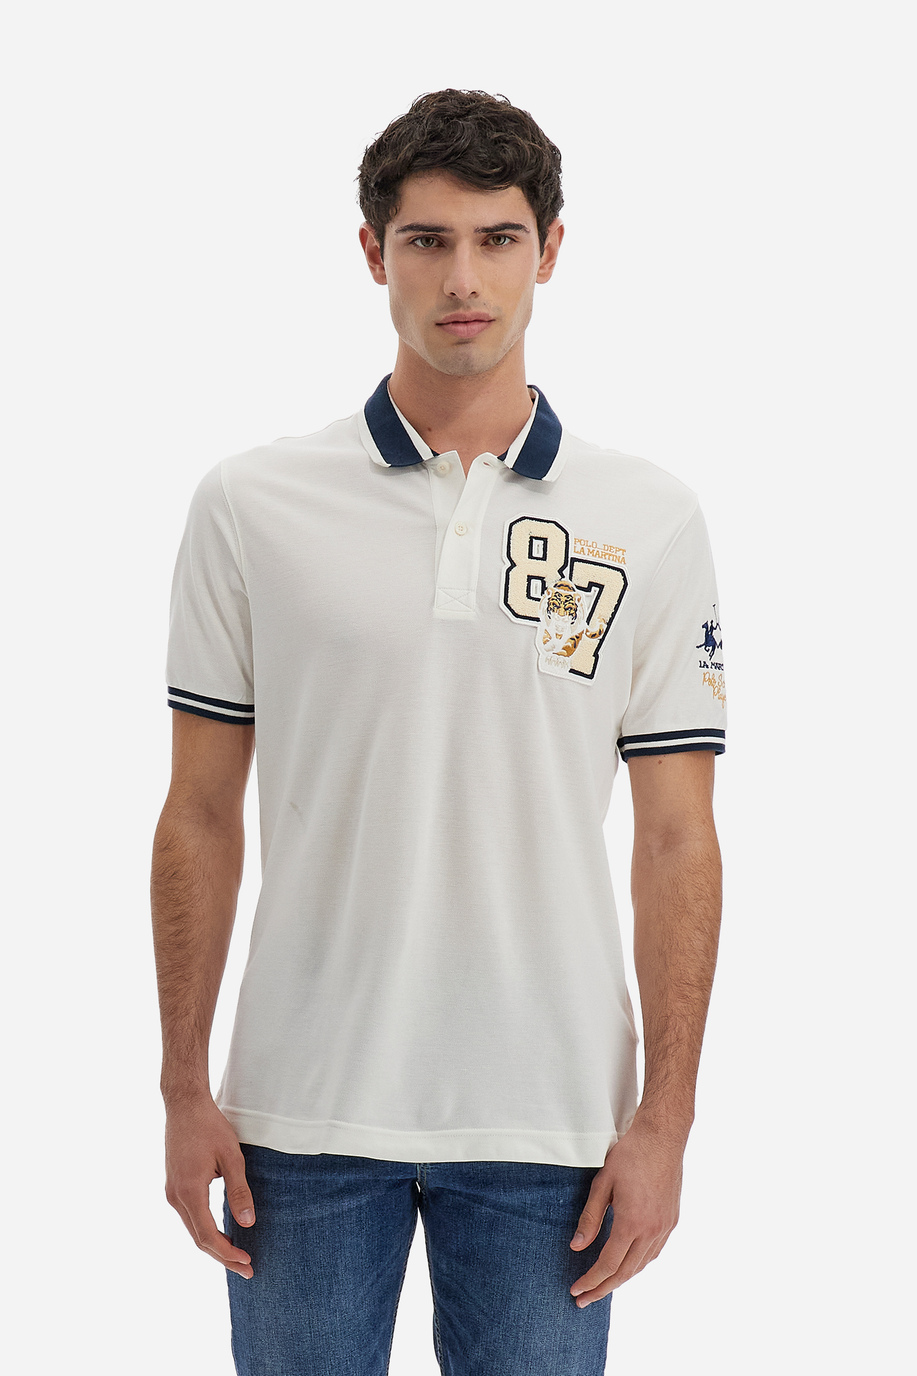 Men's short-sleeved polo shirt Polo Academy solid color mini logo and maxi patch - Vasco - Polo Shirts | La Martina - Official Online Shop